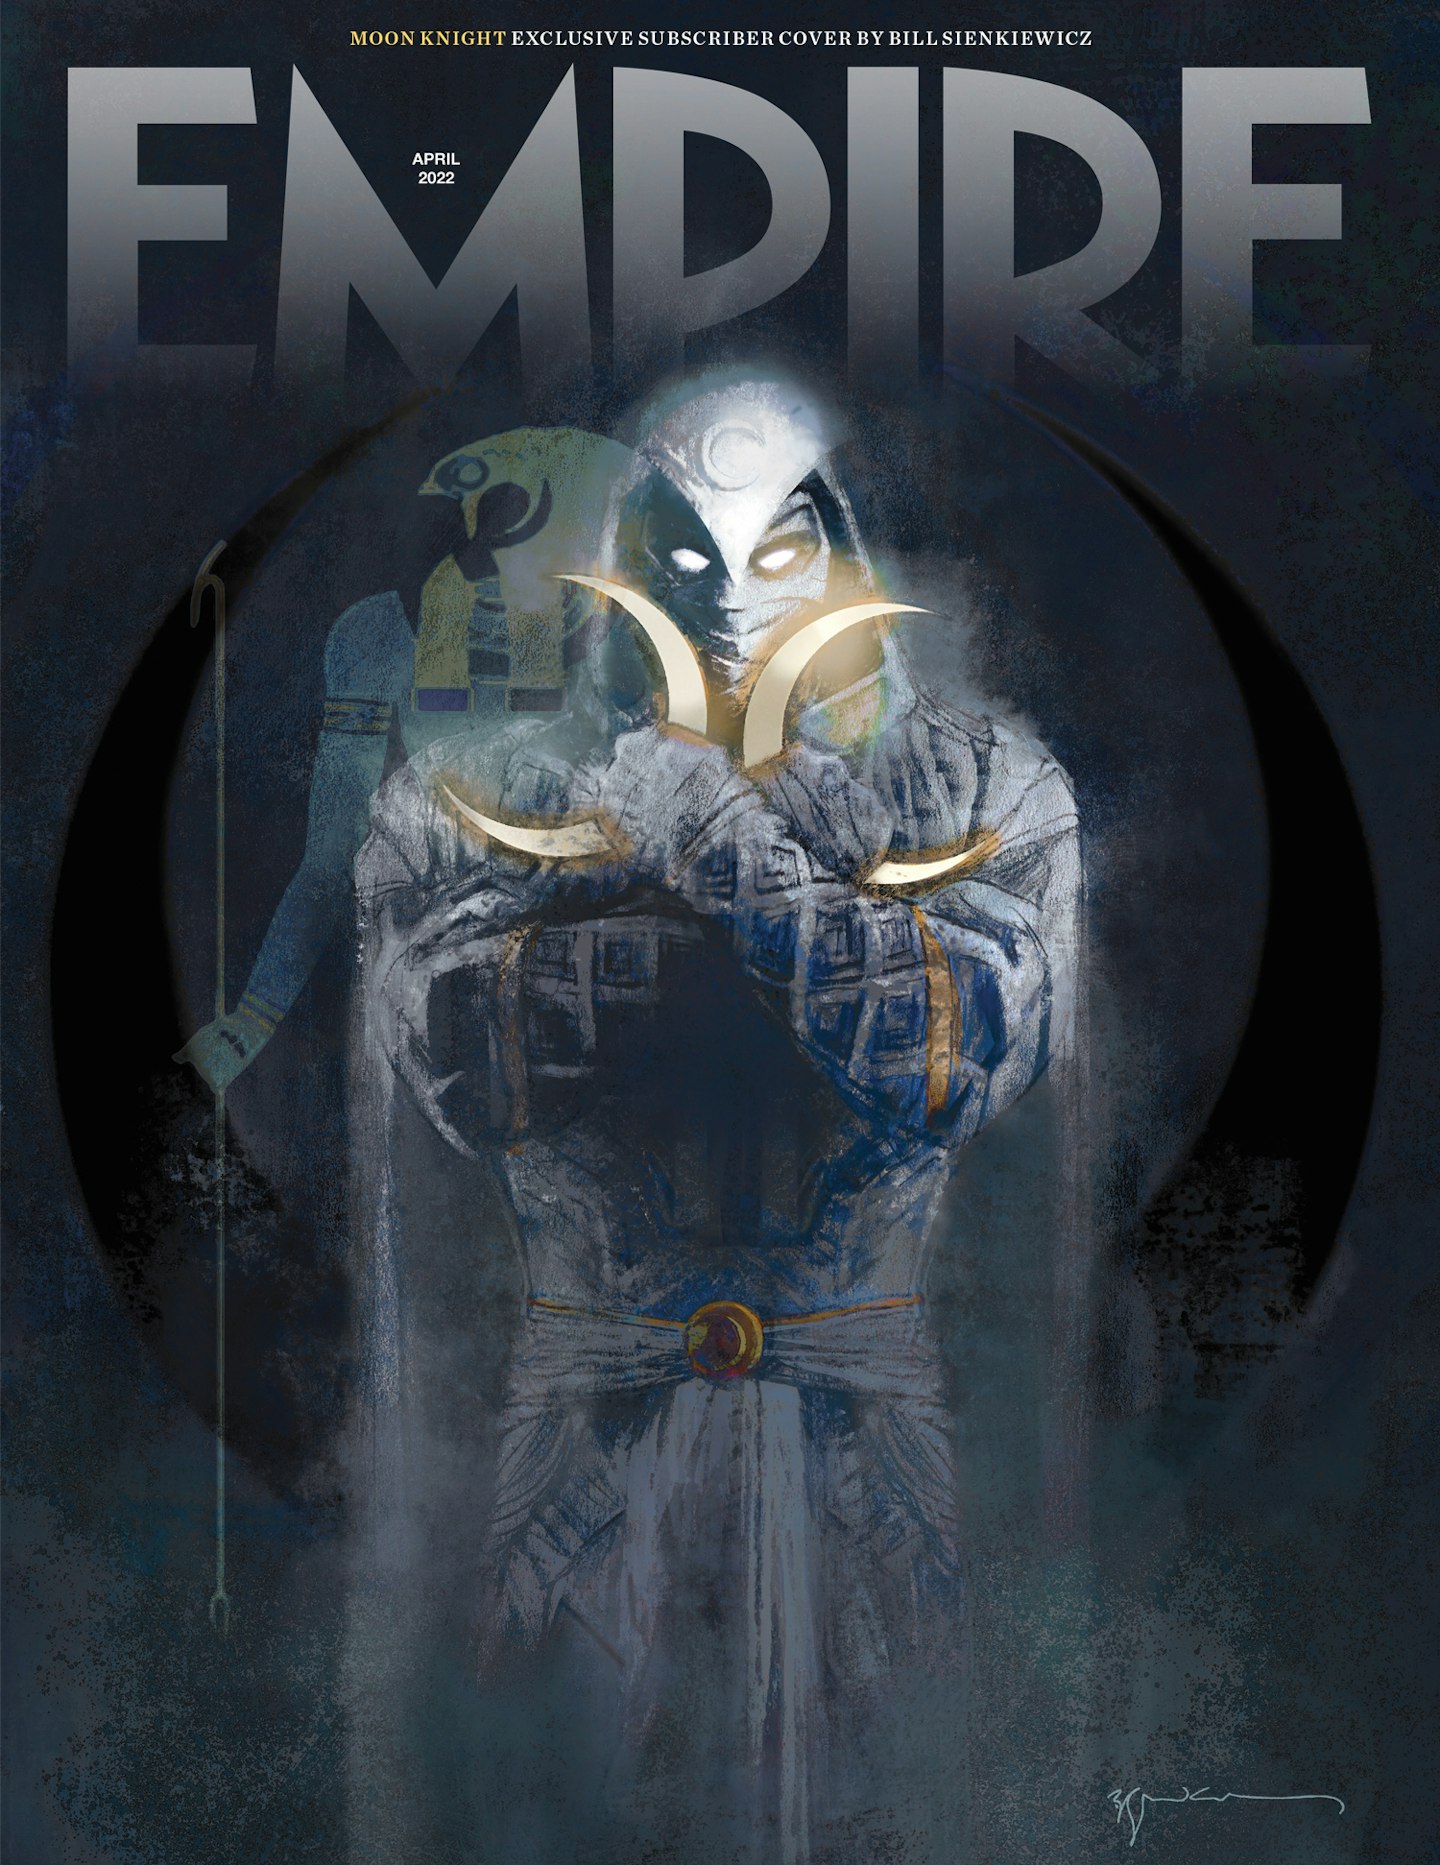 Empire – April 2022 subscriber cover